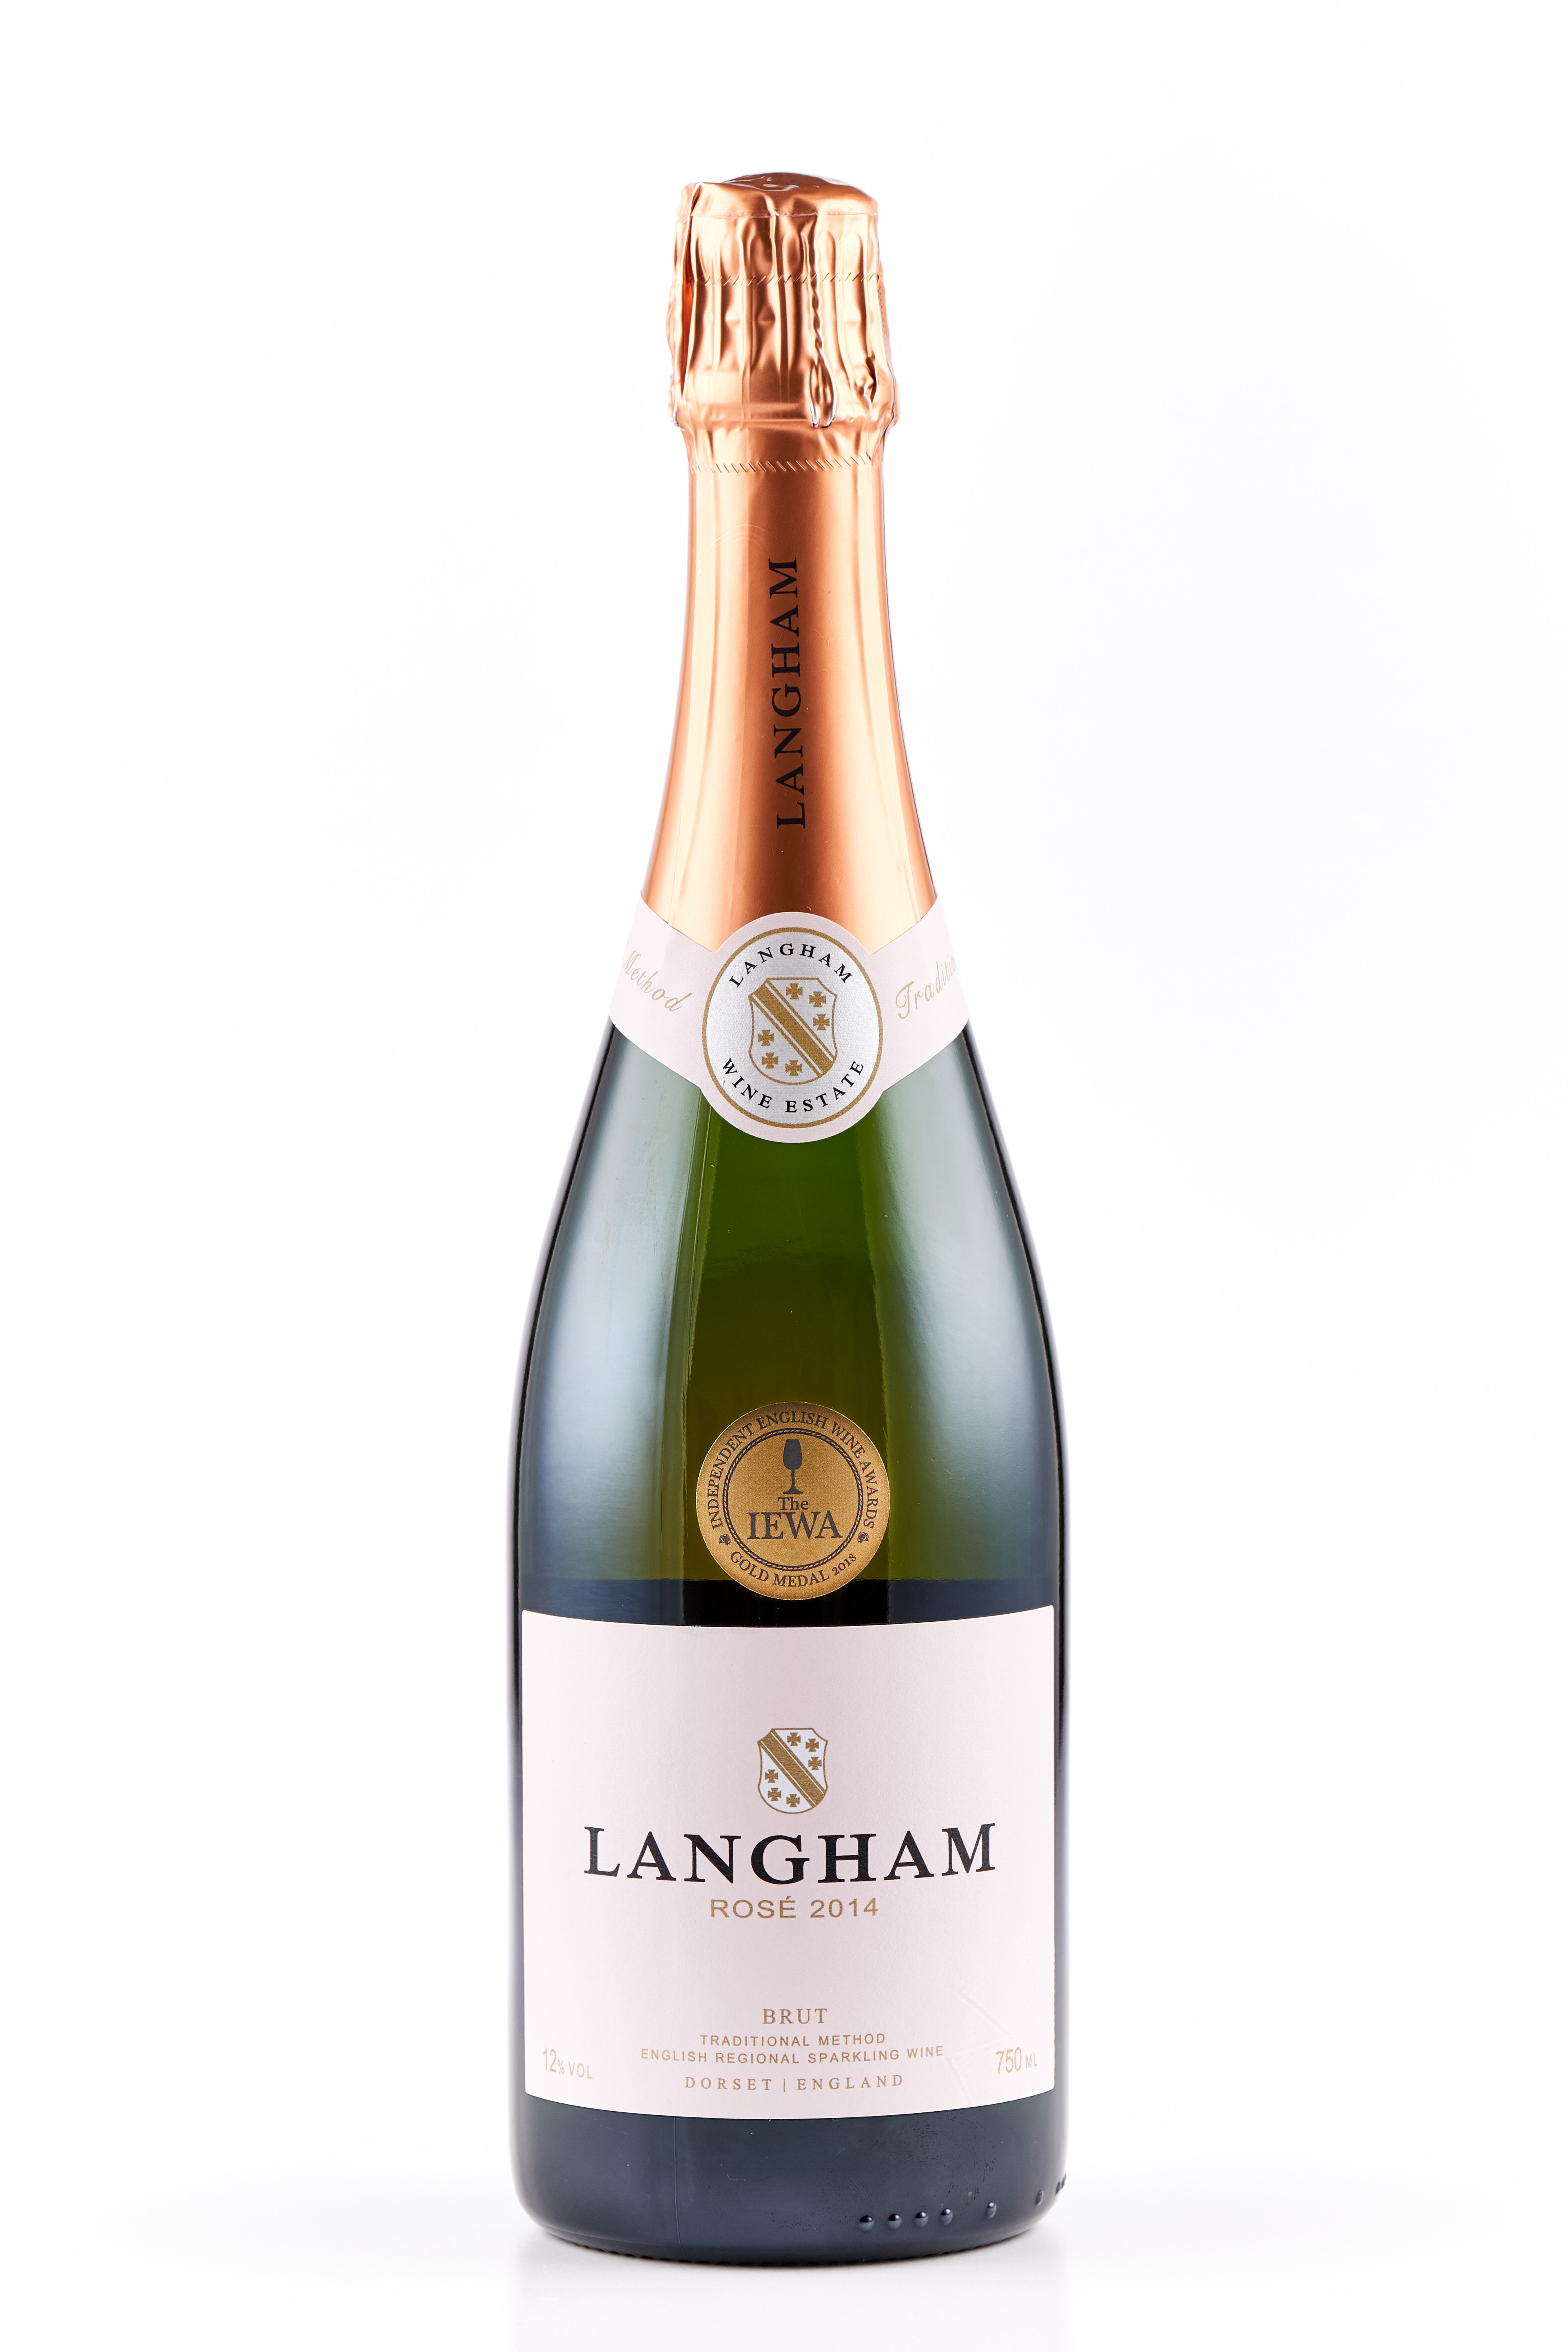 Langham wine